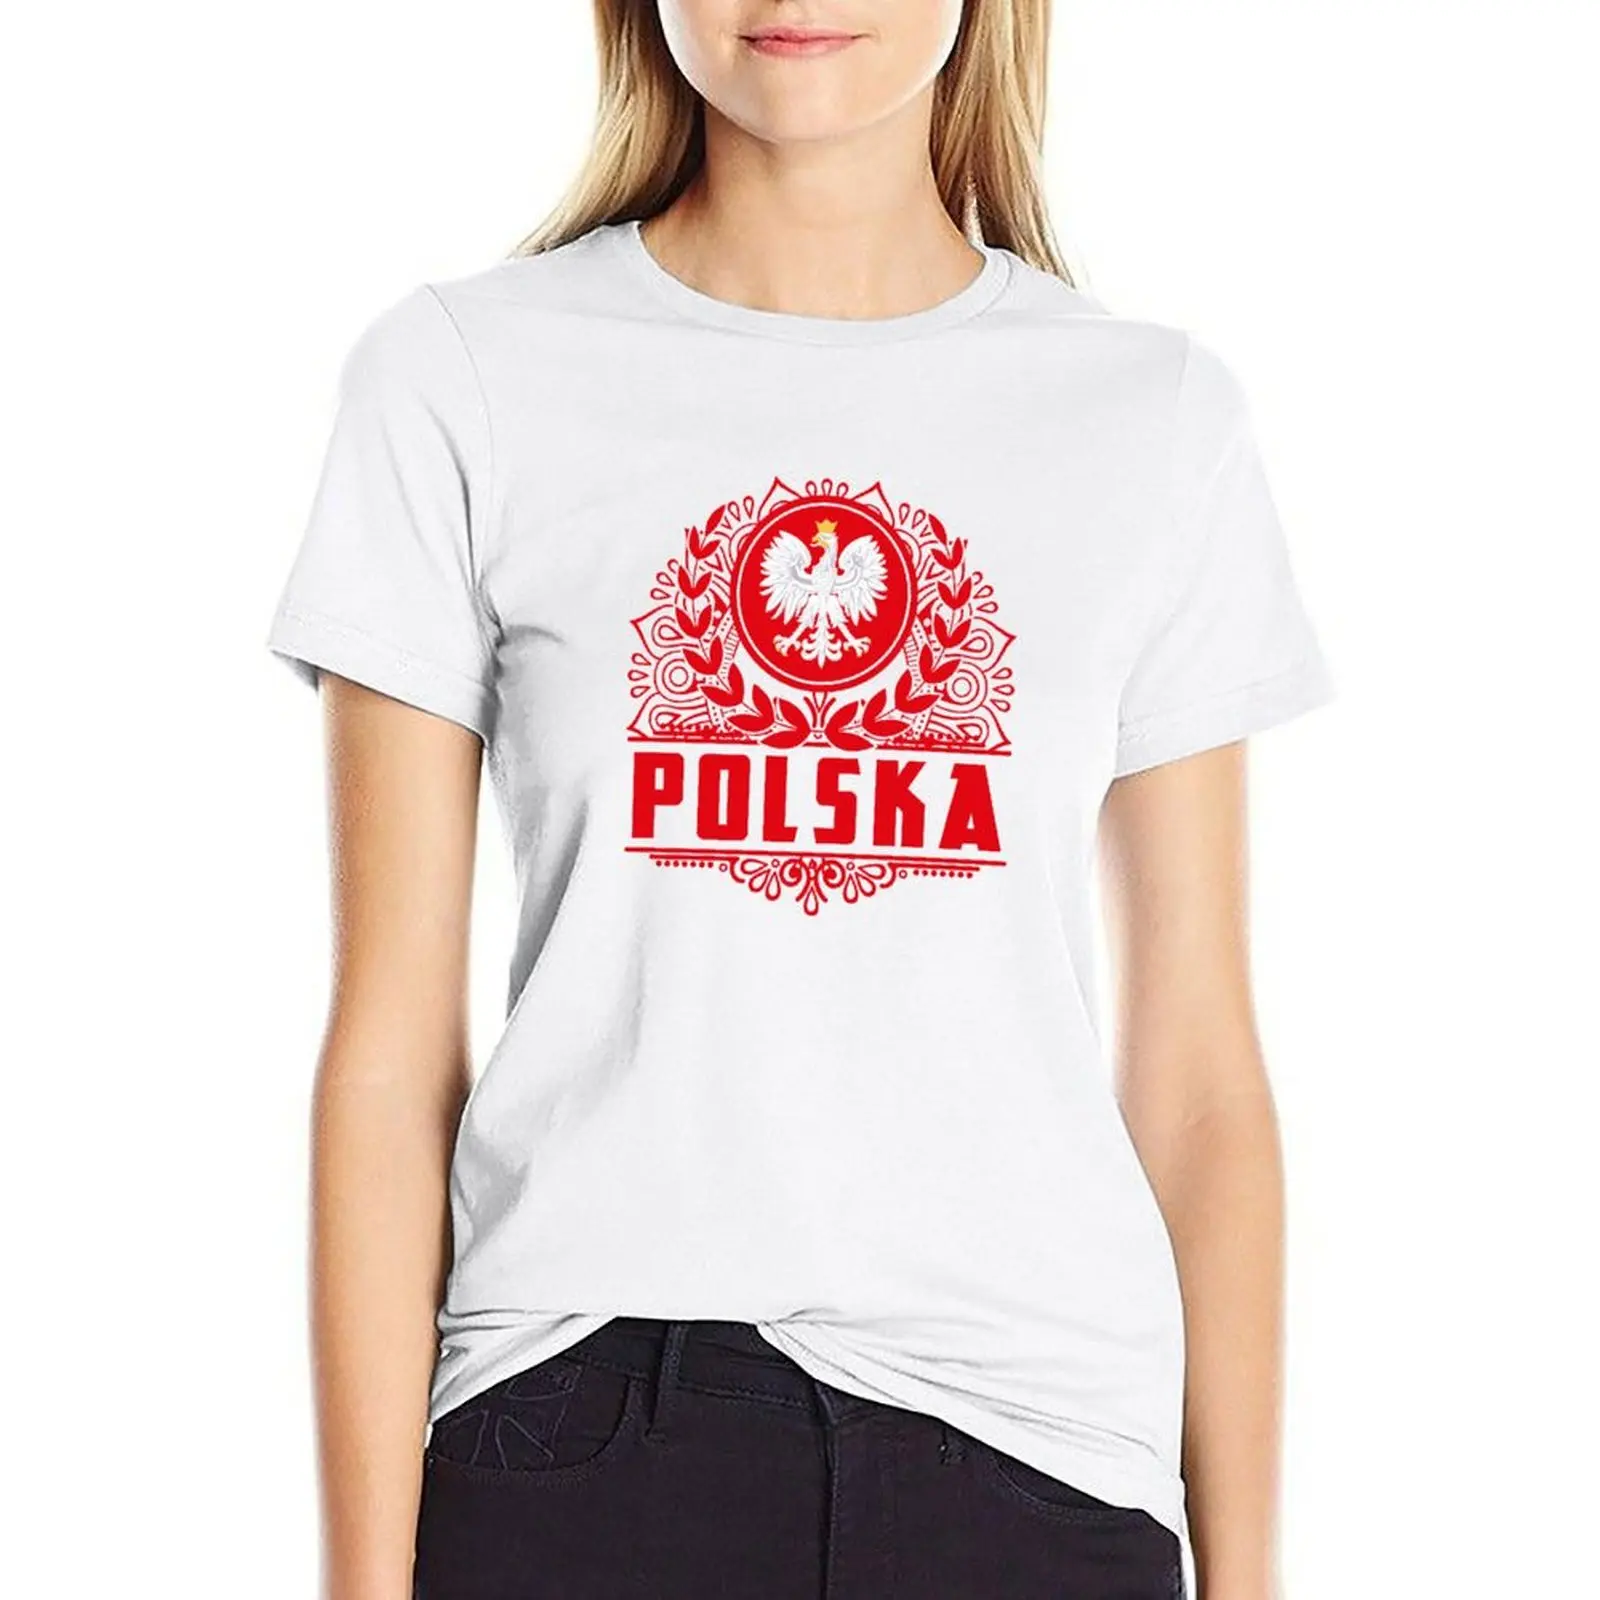 

Polska Poland Mandala T-shirt plus size tops oversized anime clothes western t-shirt dress for Women